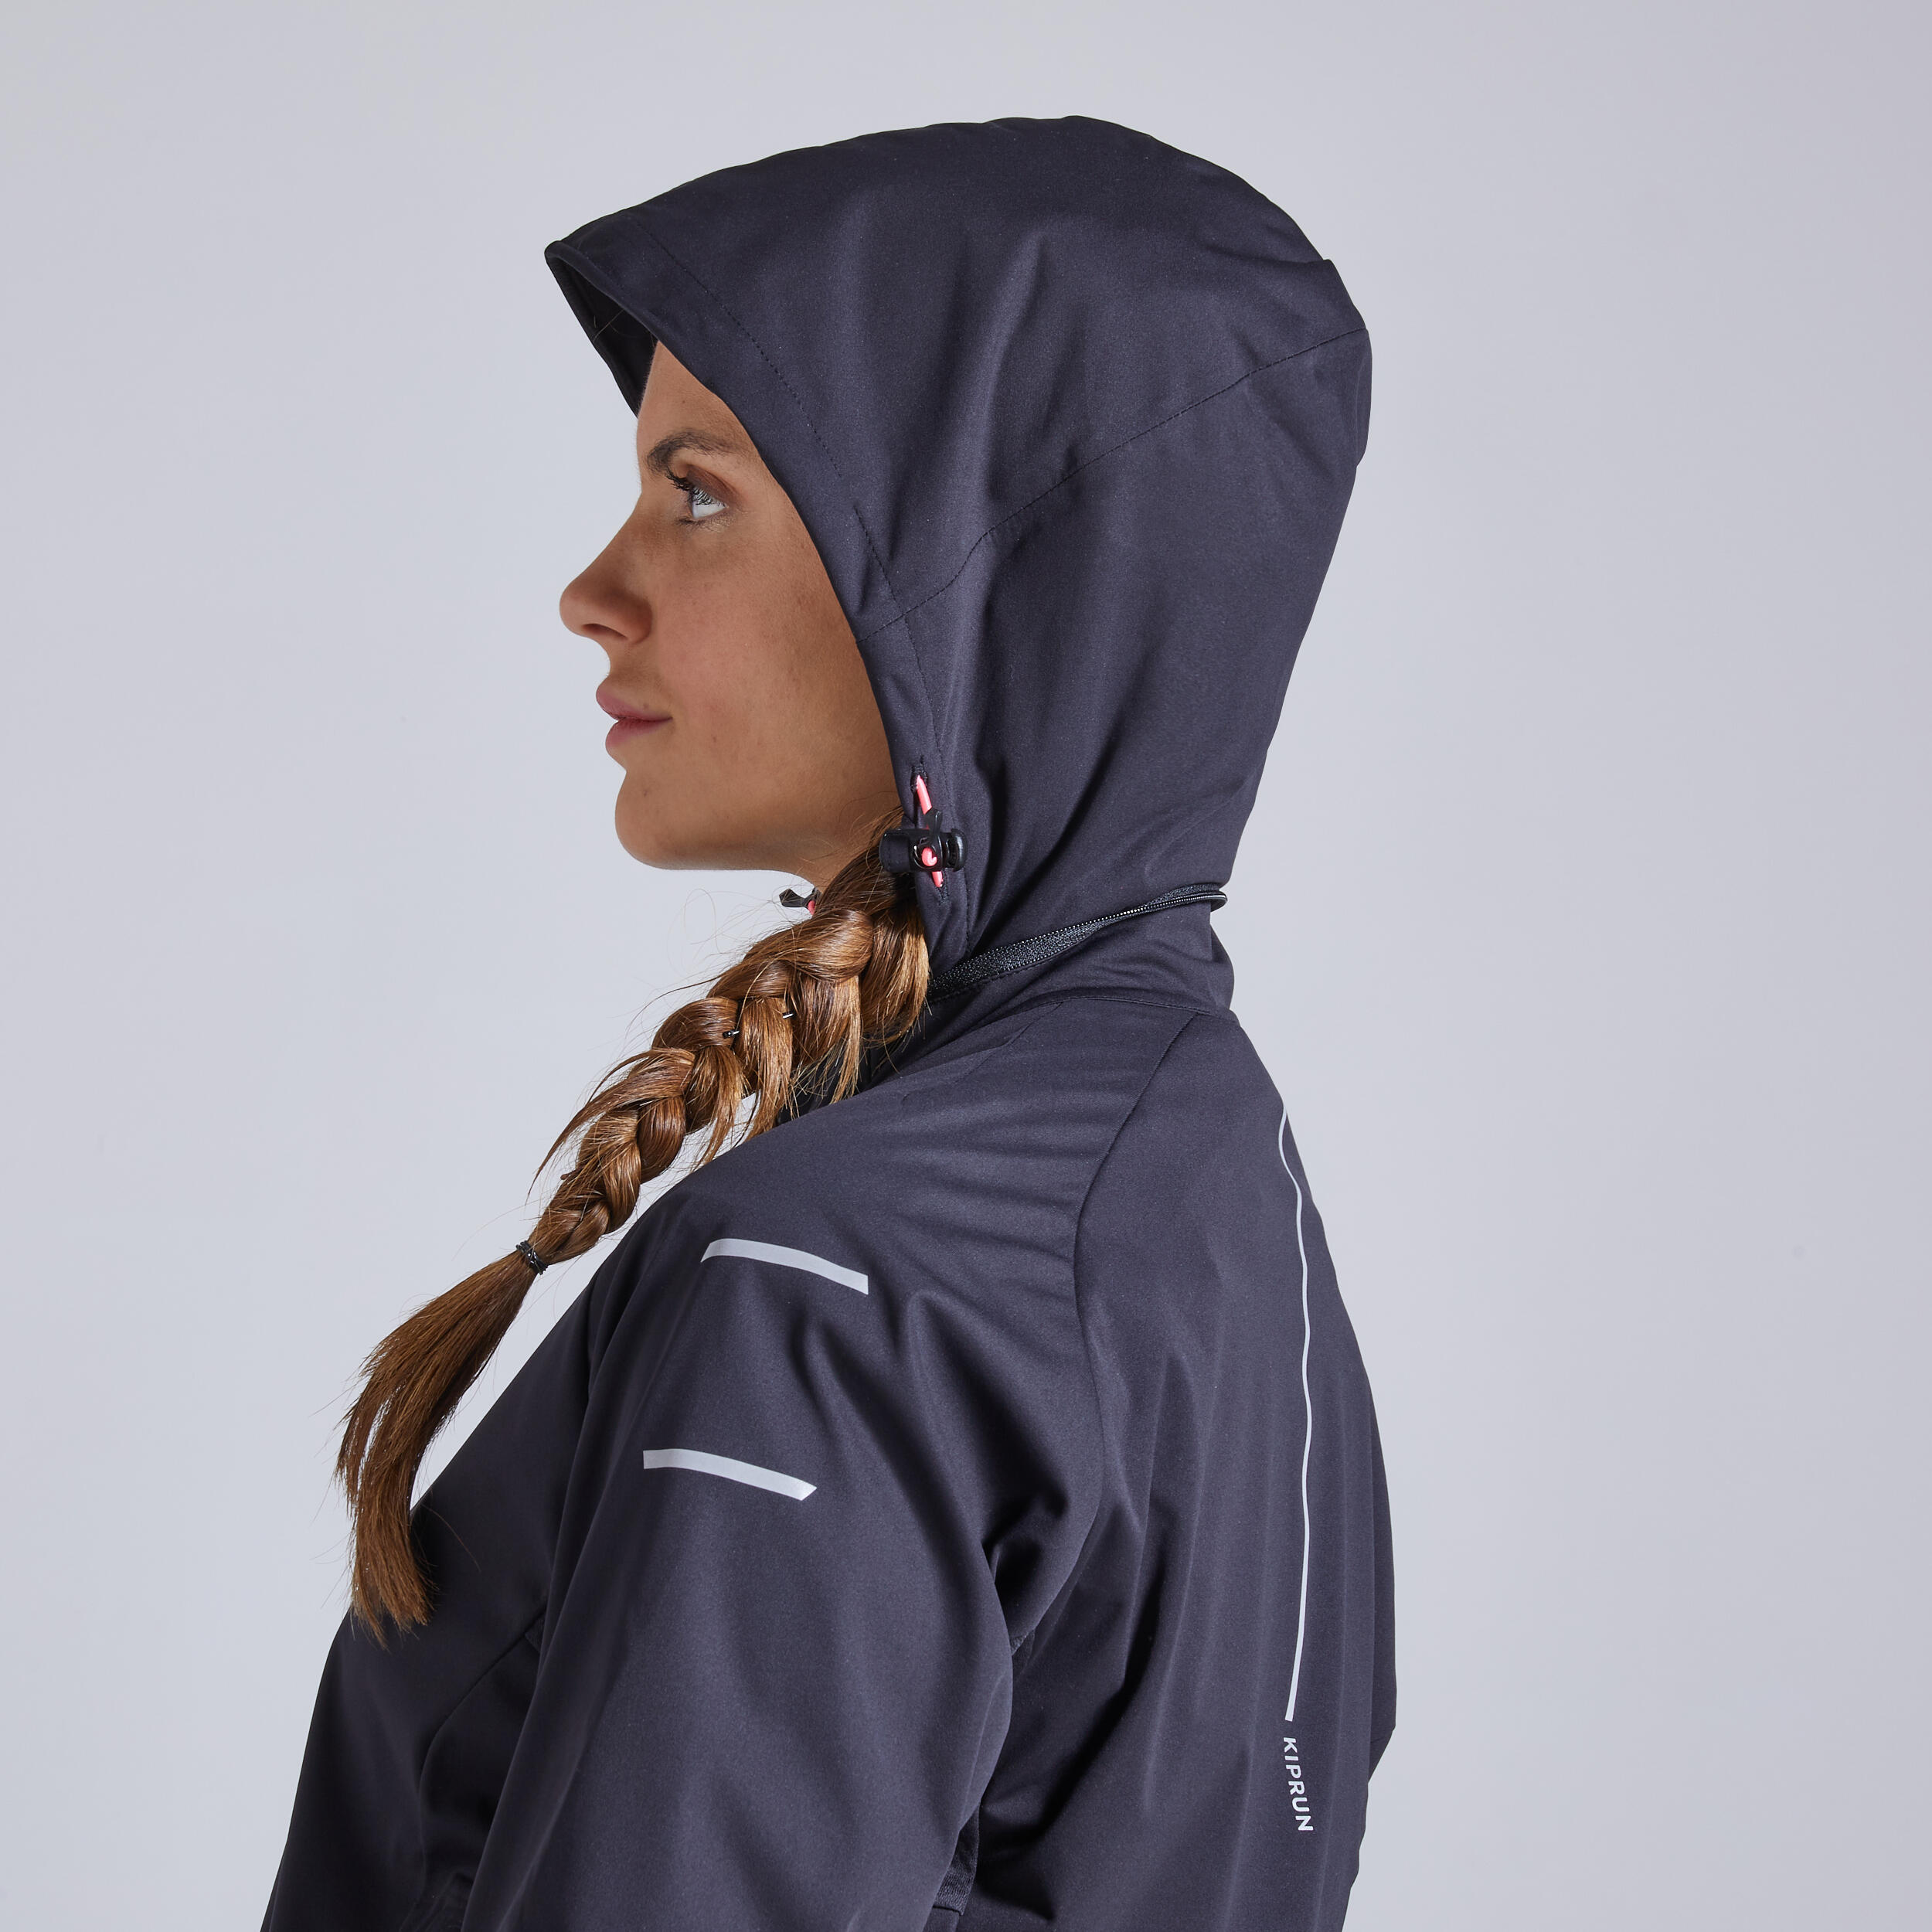 Black Decathlon Branded Hoodie Jackets, Women at Rs 1200/piece in